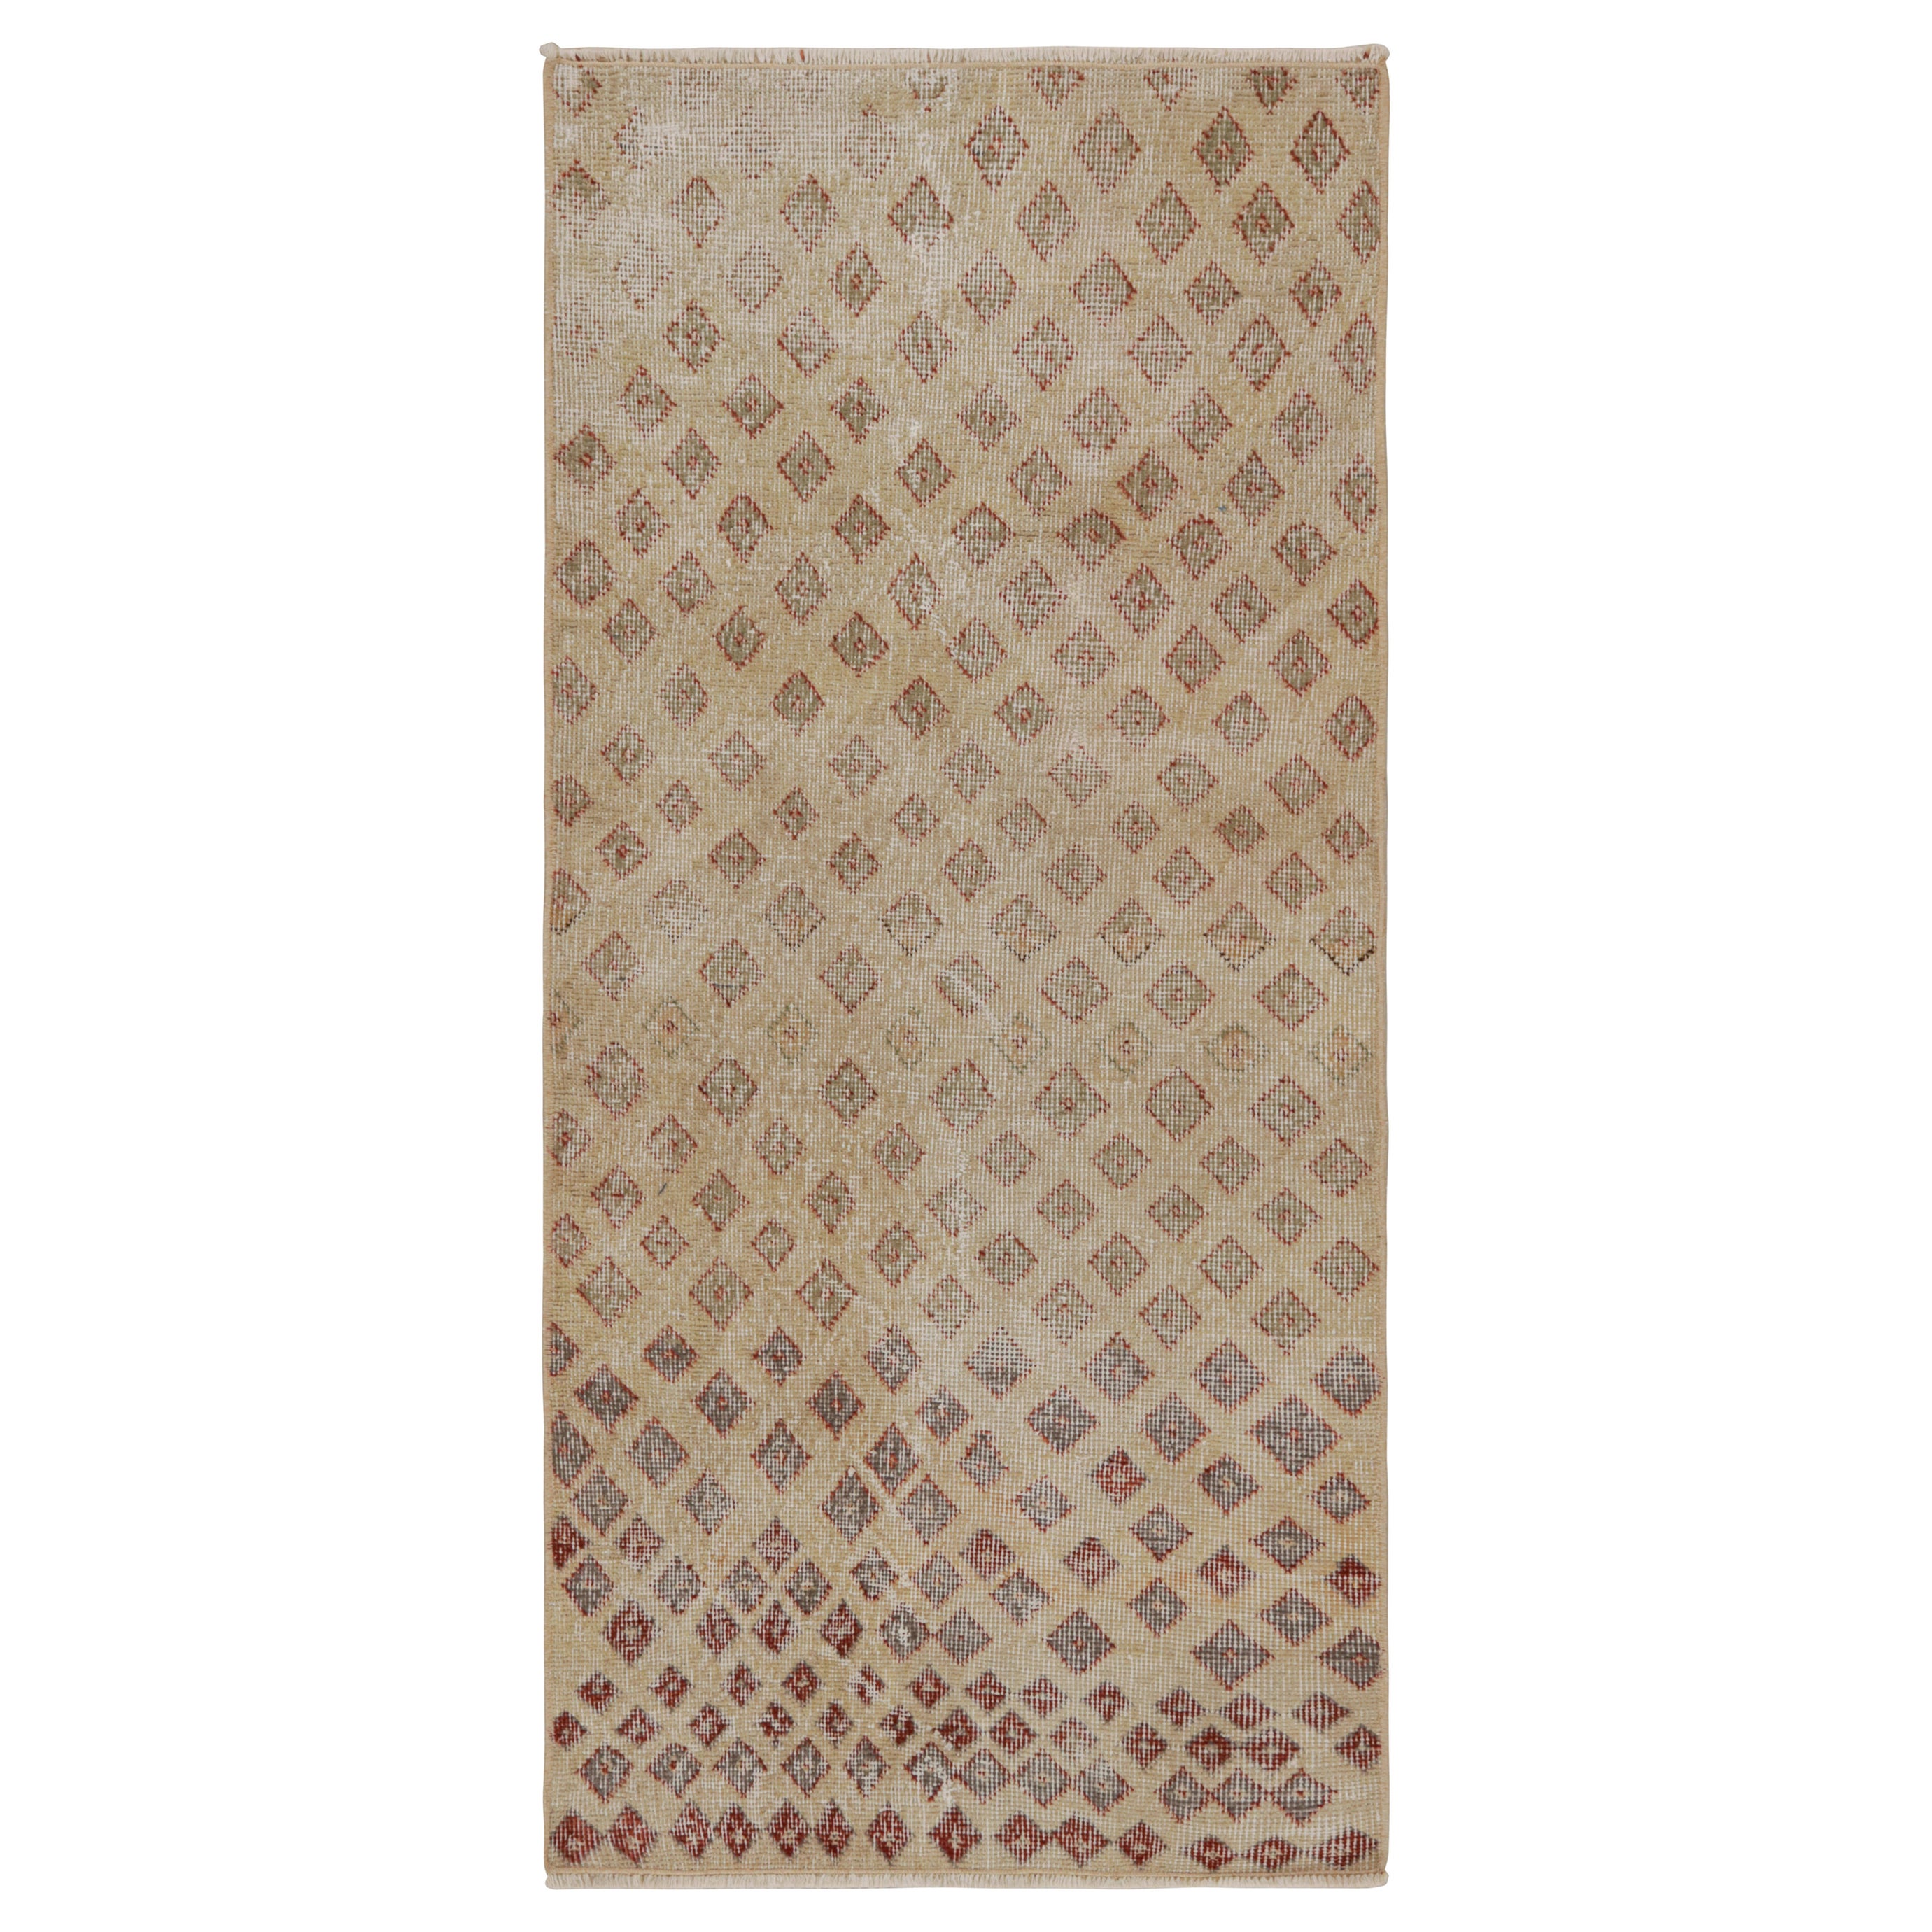 Vintage Zeki Müren Rug, with All-Over Geometric patterns, from Rug & Kilim For Sale